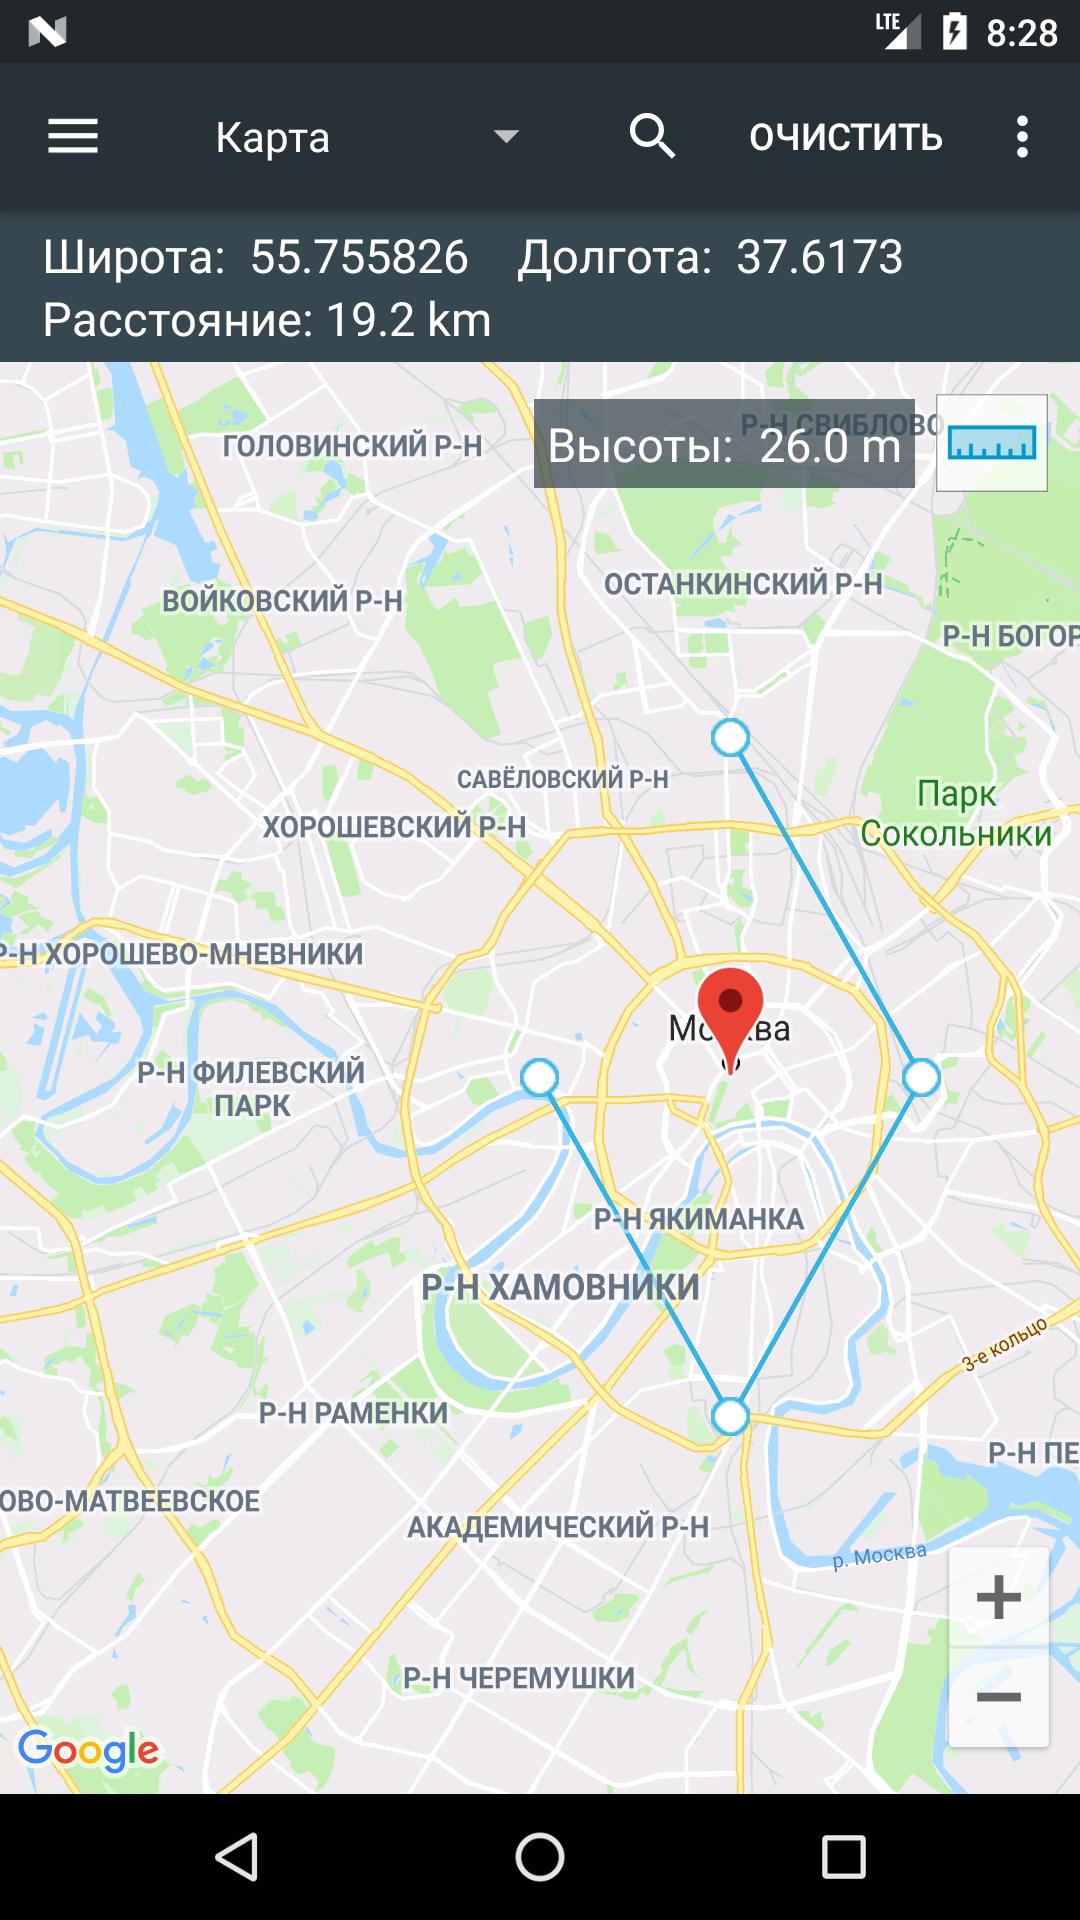 Андроид без местоположения. Скрин местоположения в Москве. Карта геолокации. Геолокация с координатами. GPS координаты на карте.